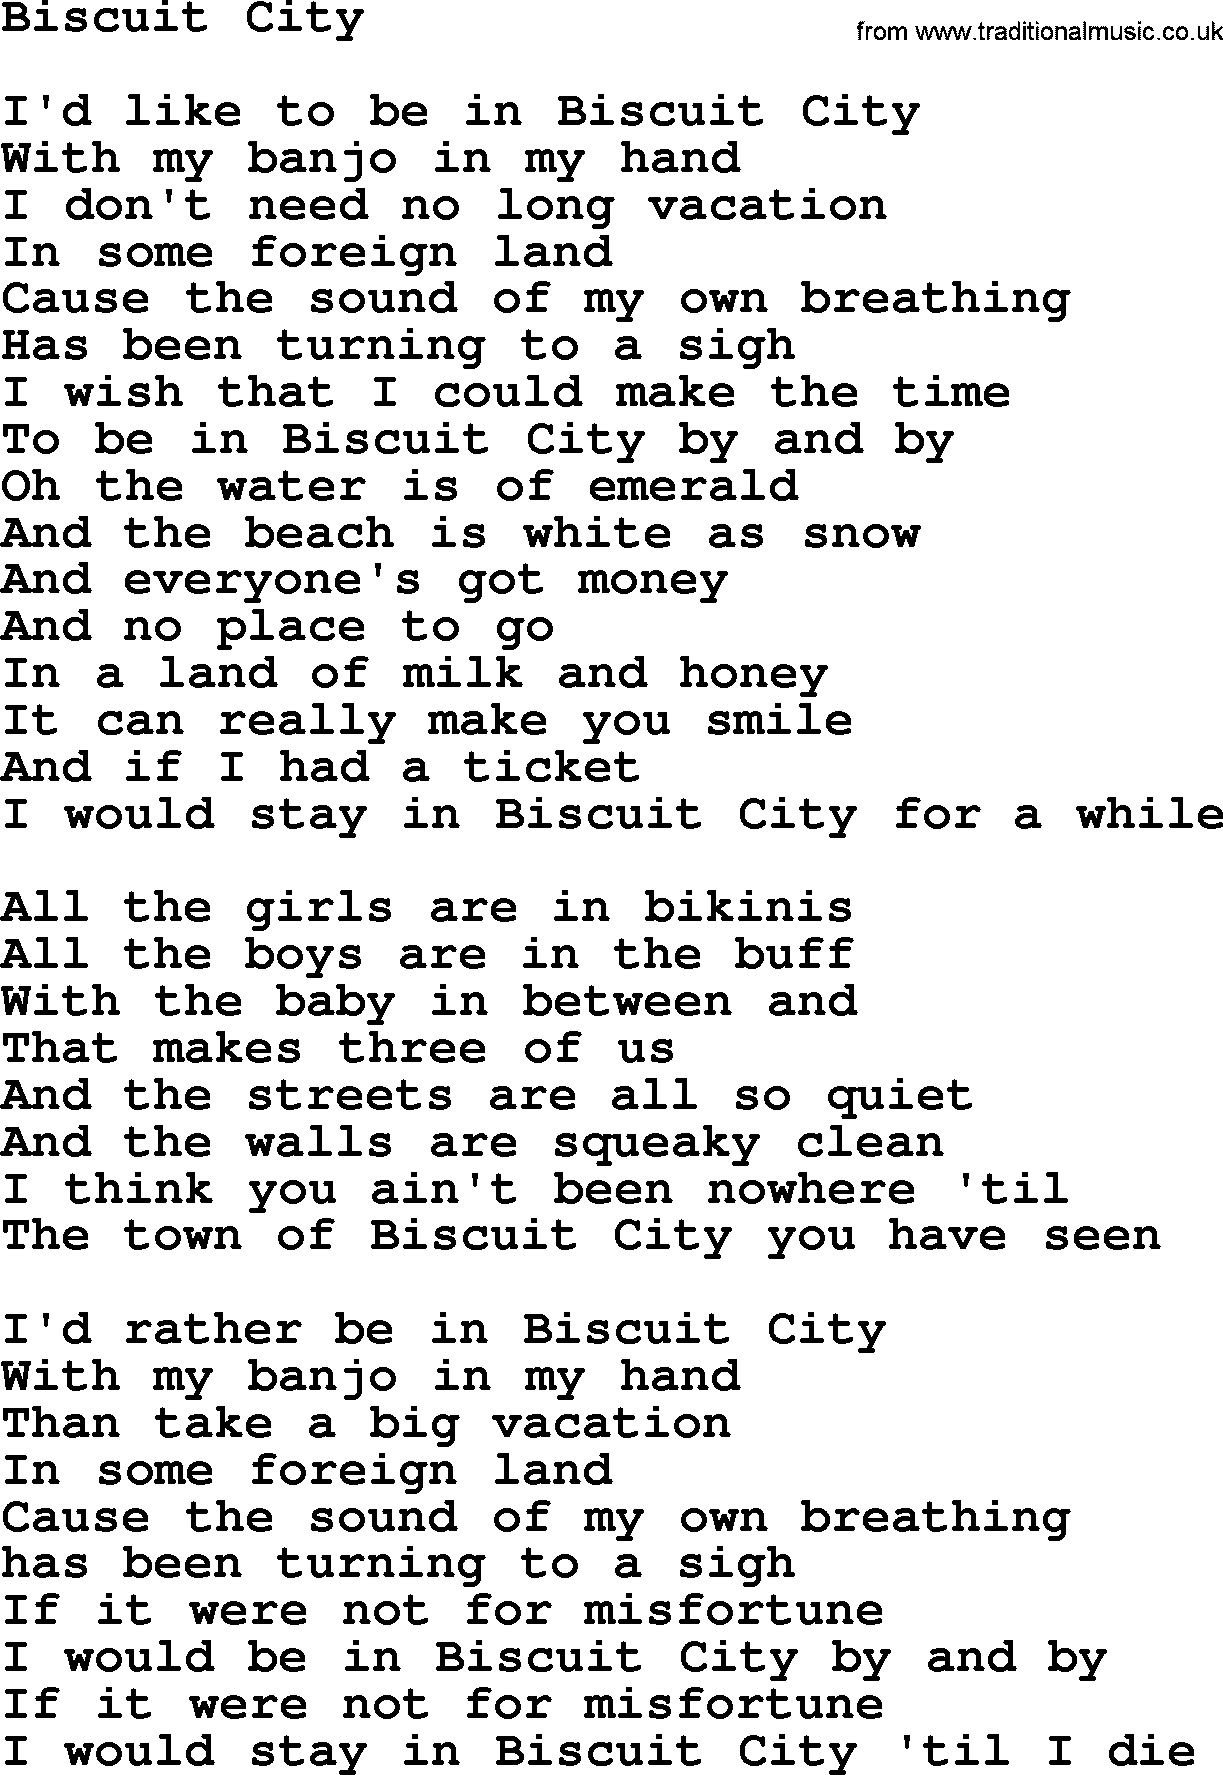 Gordon Lightfoot song Biscuit City, lyrics